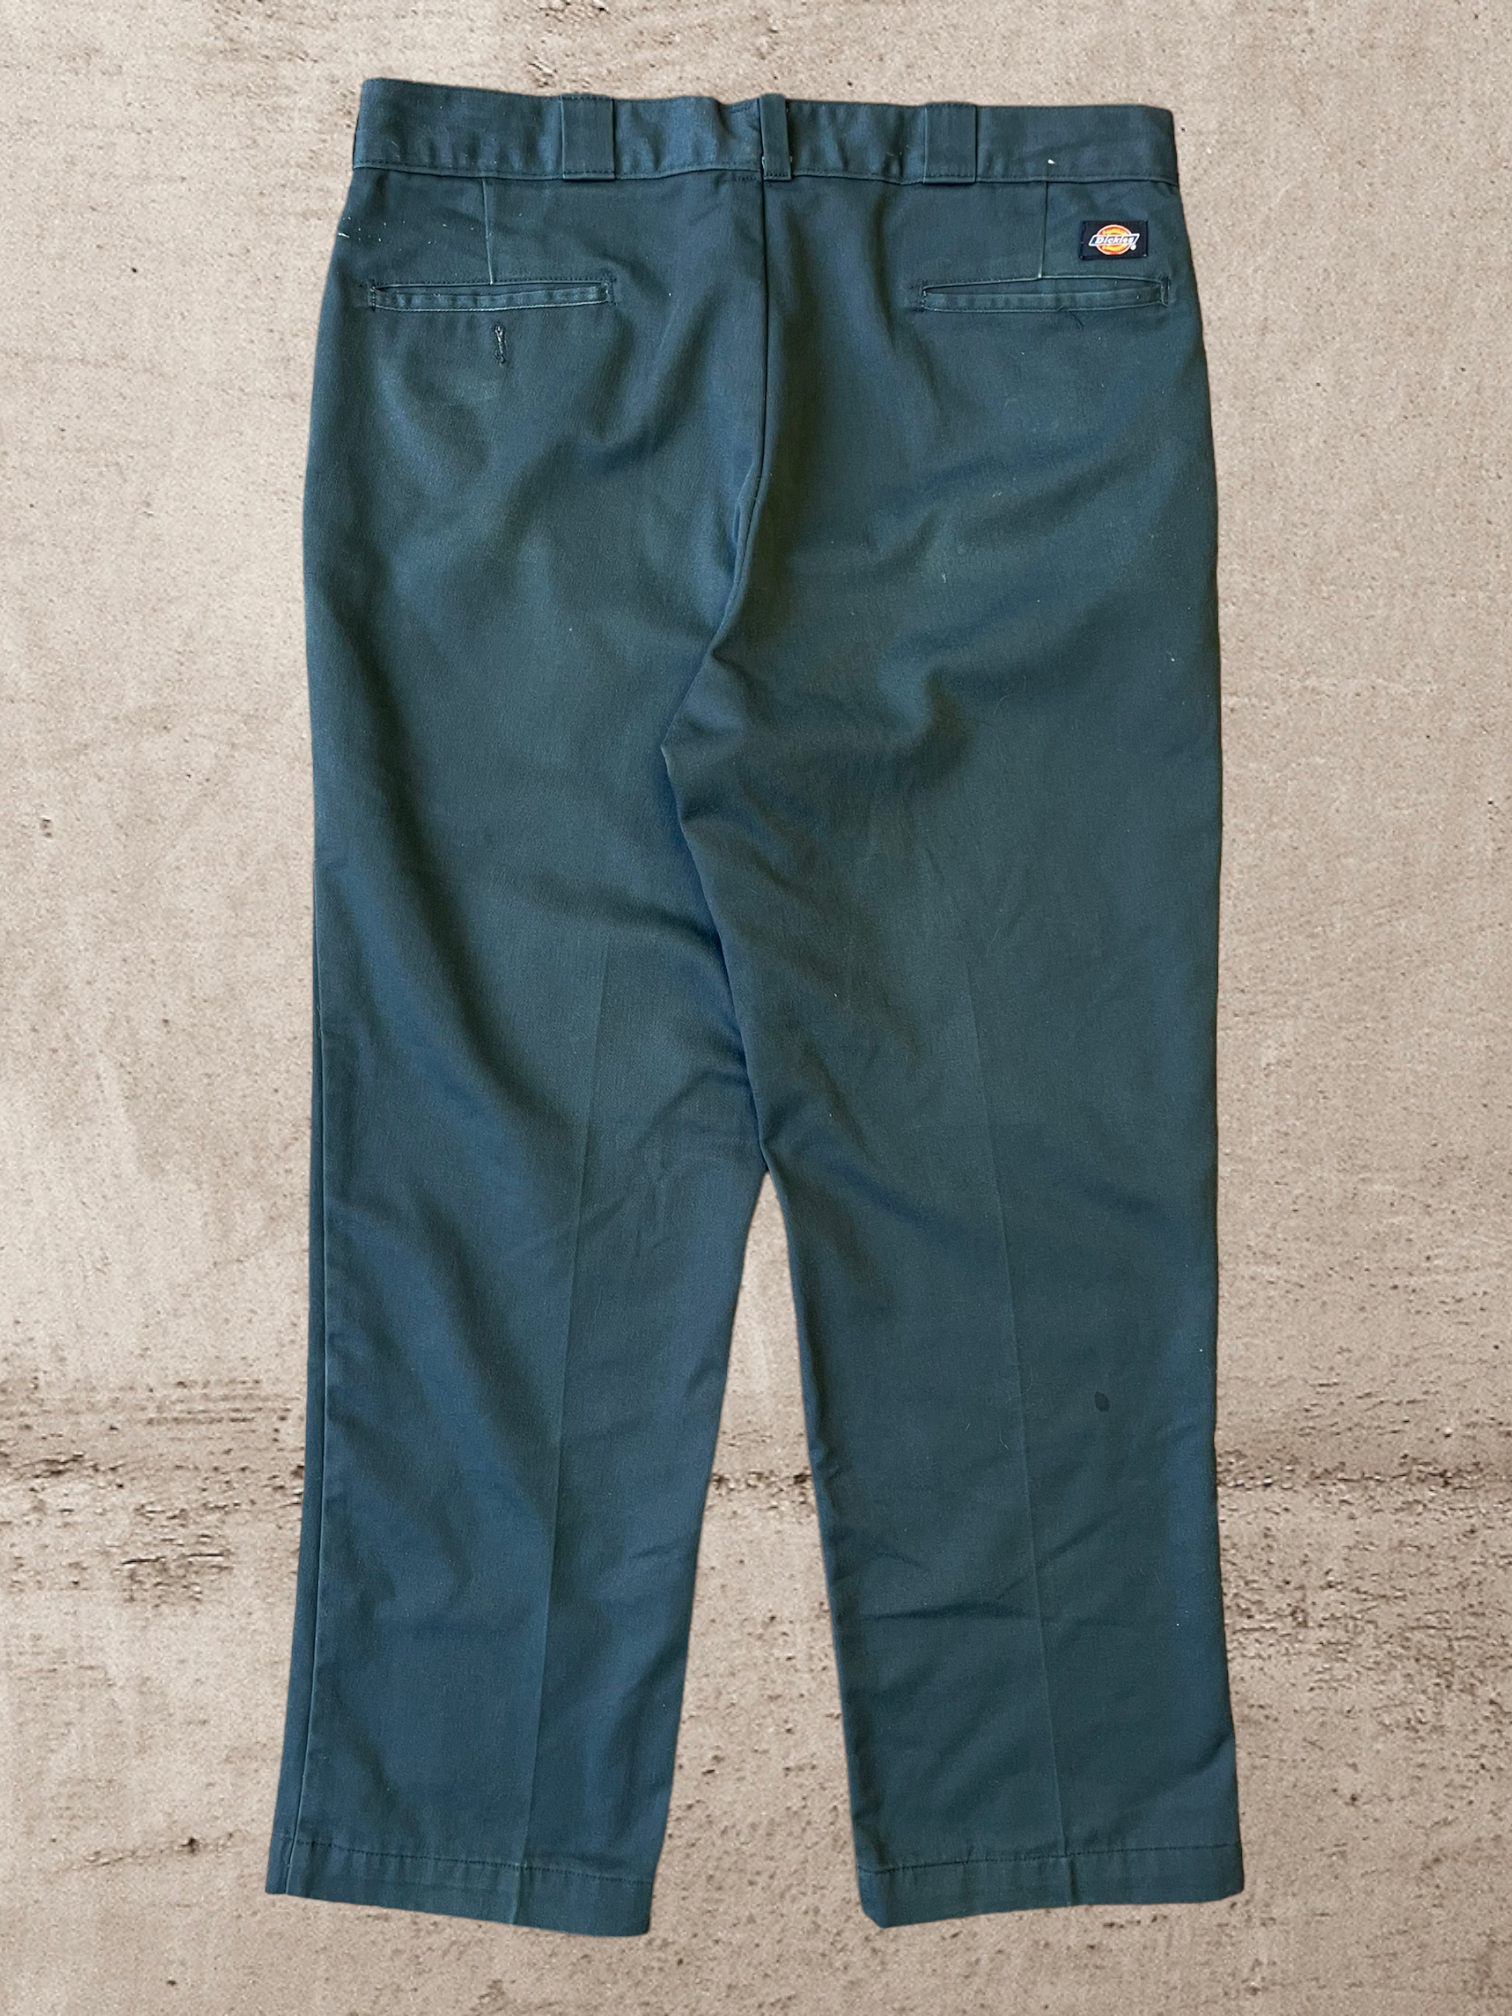 90s Dickies Fleece Insulated Pants - 39x29